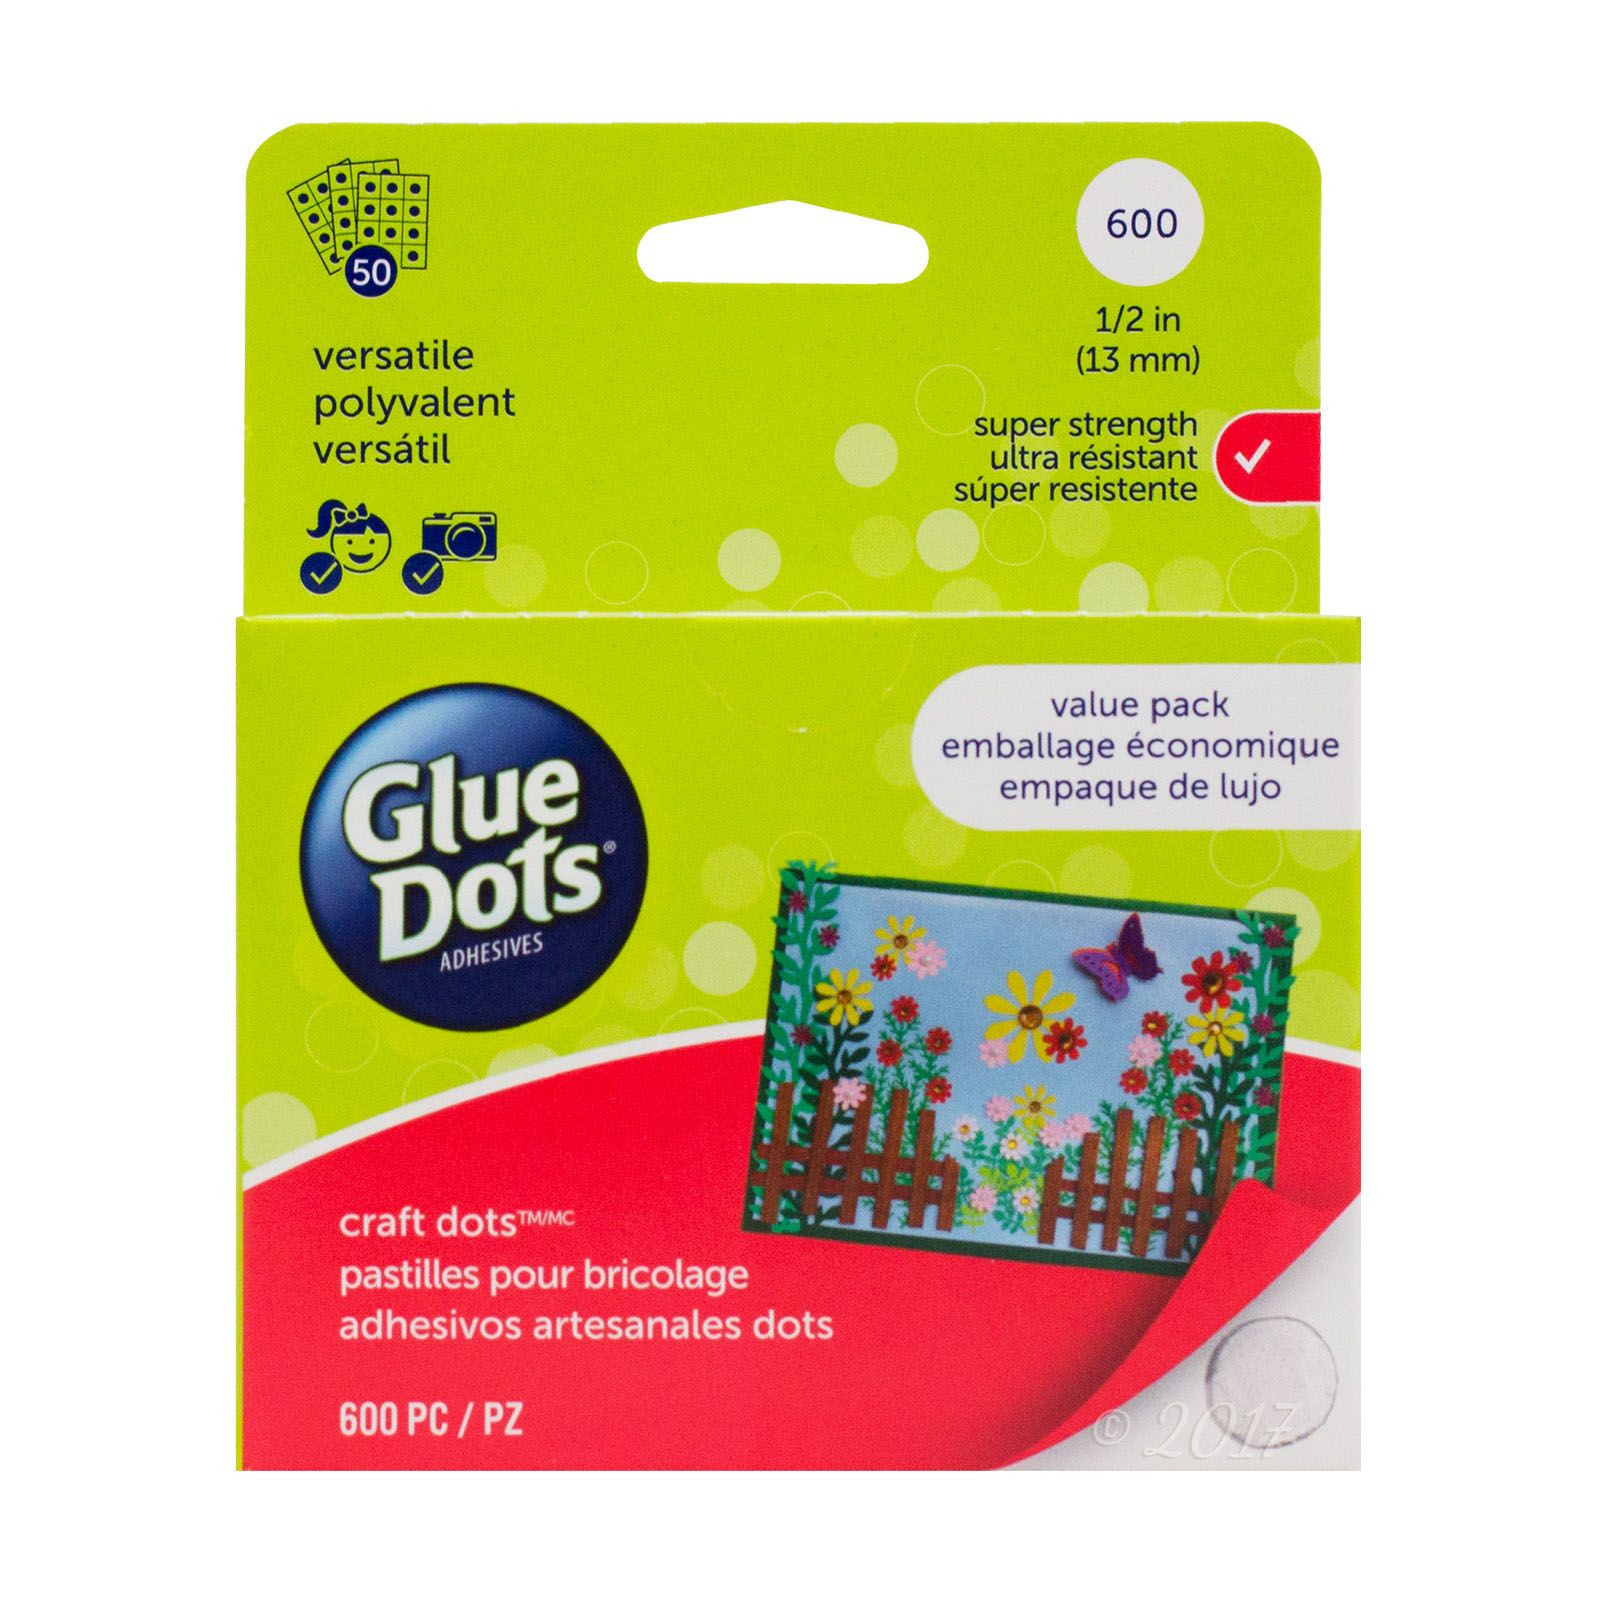 Glue Dots • Craft dots value pack 13mm